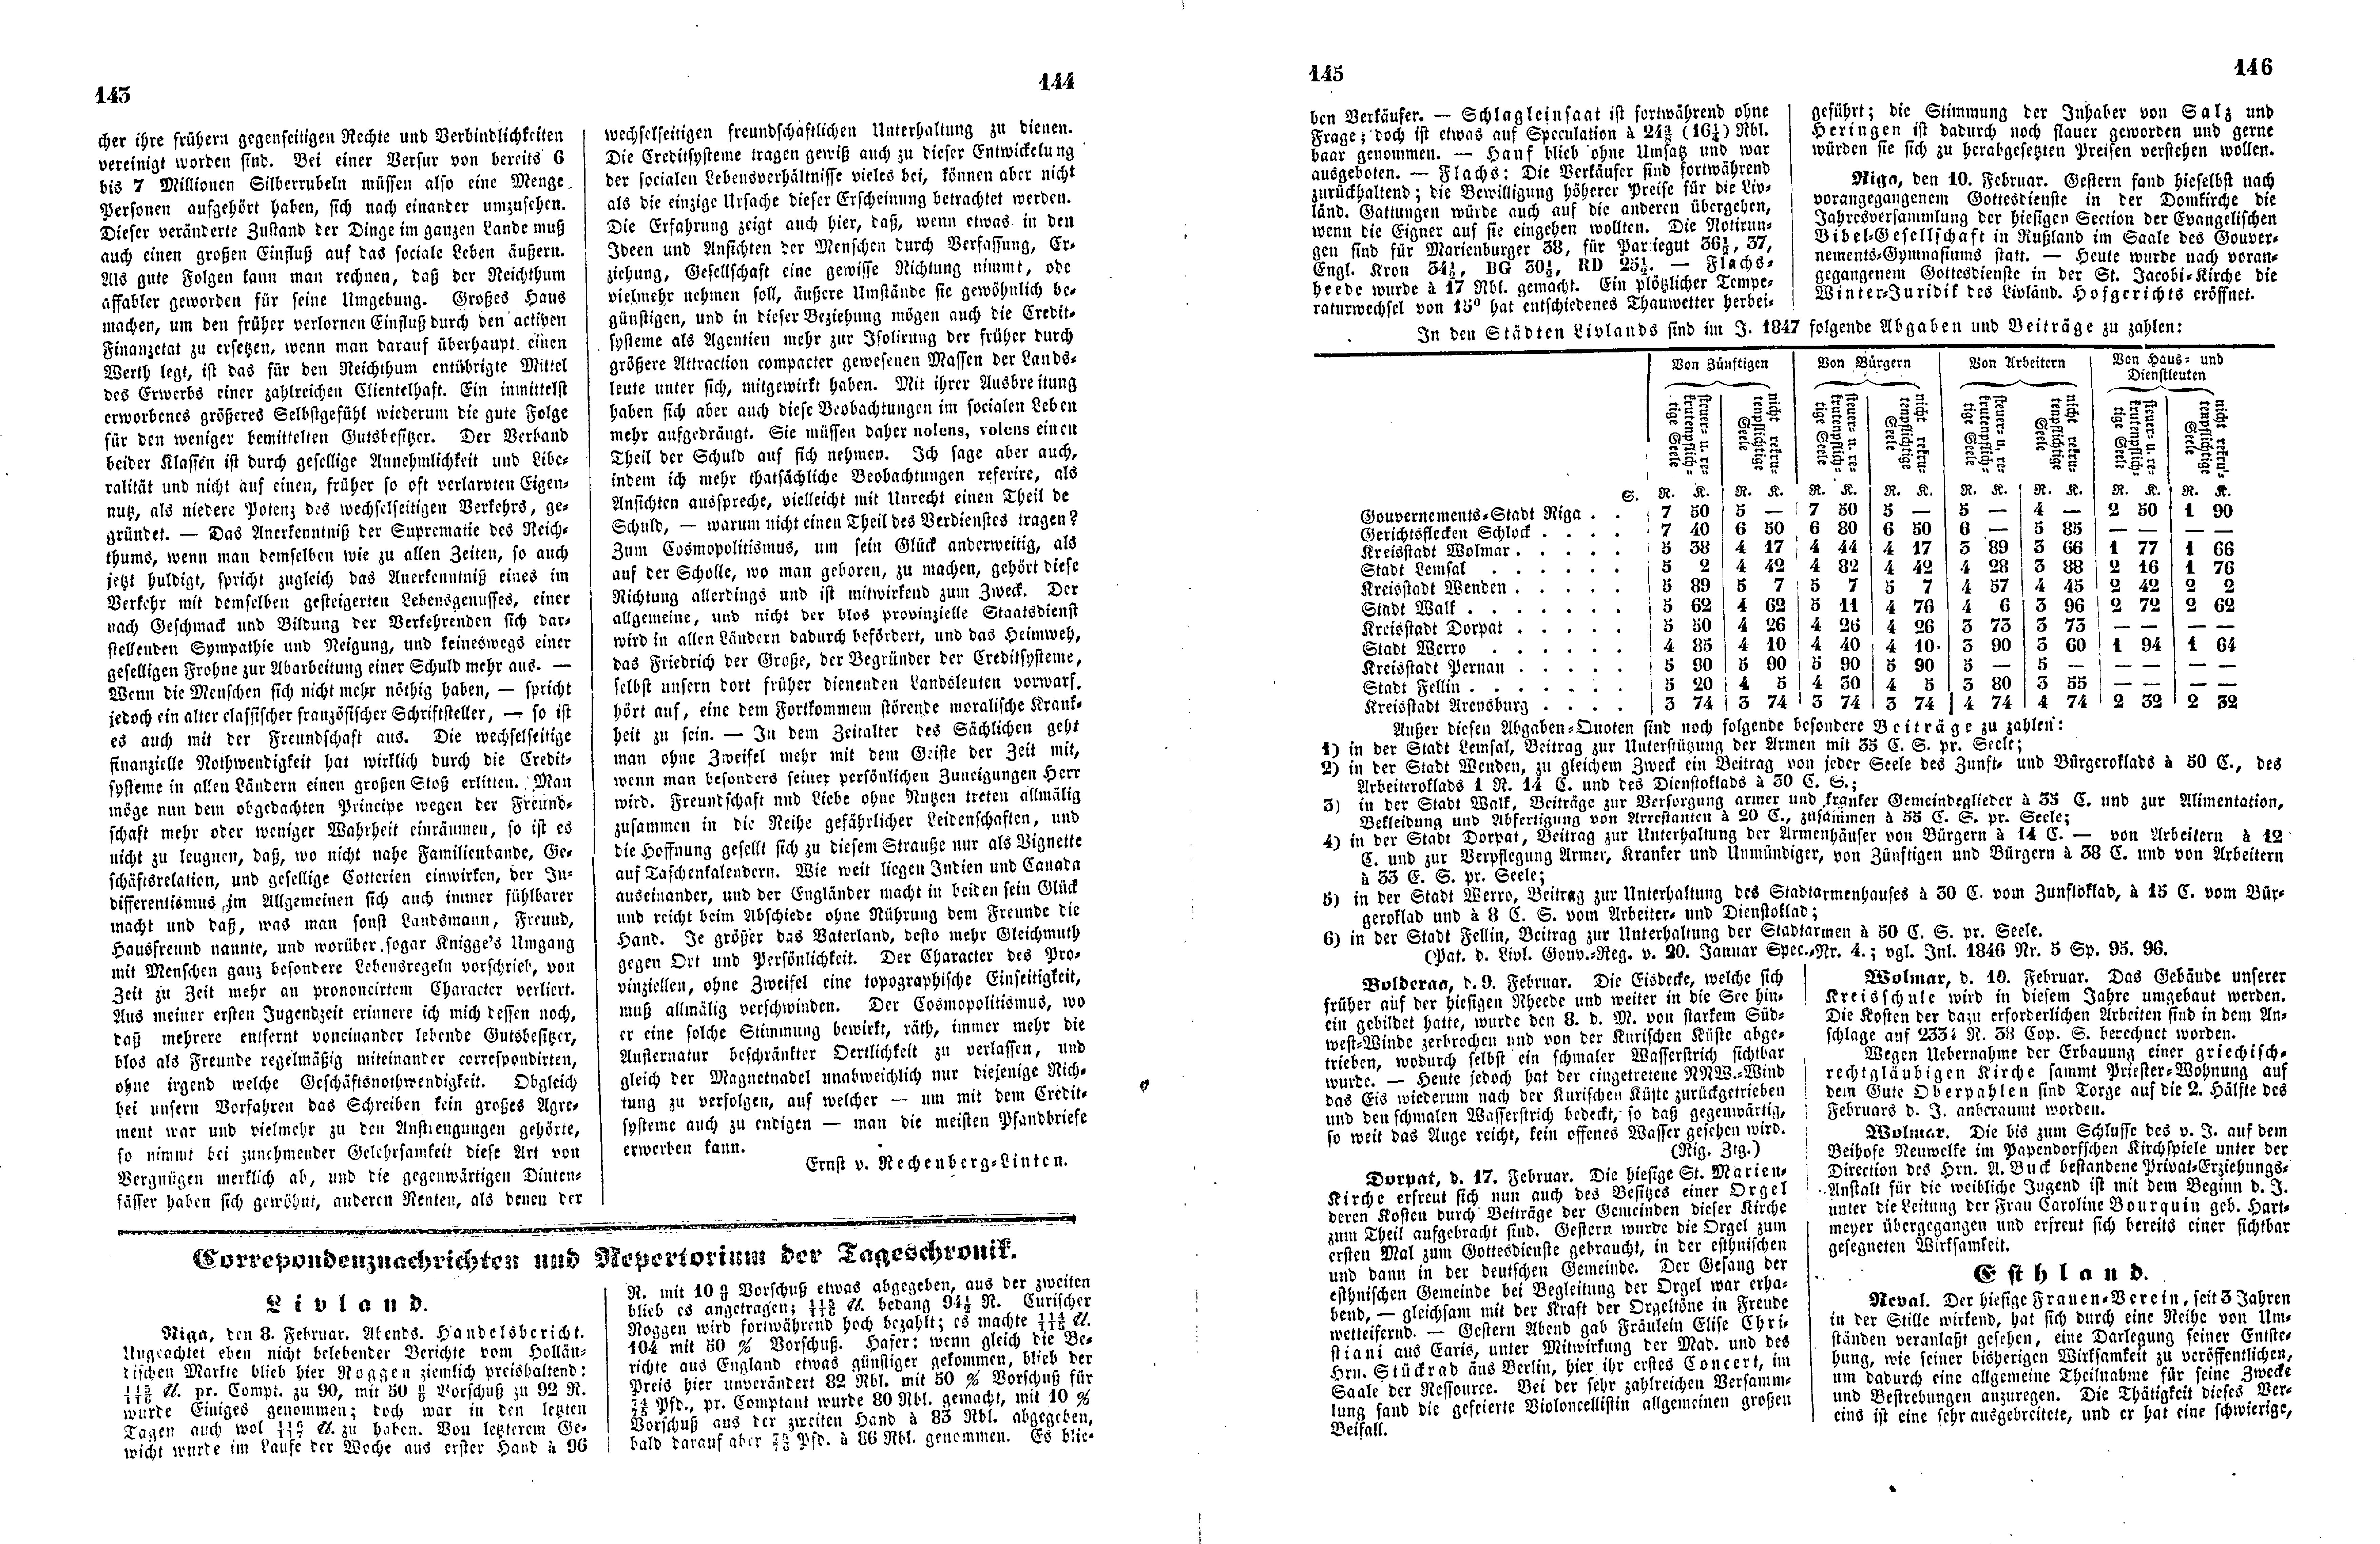 Das Inland [12] (1847) | 41. (143-146) Main body of text